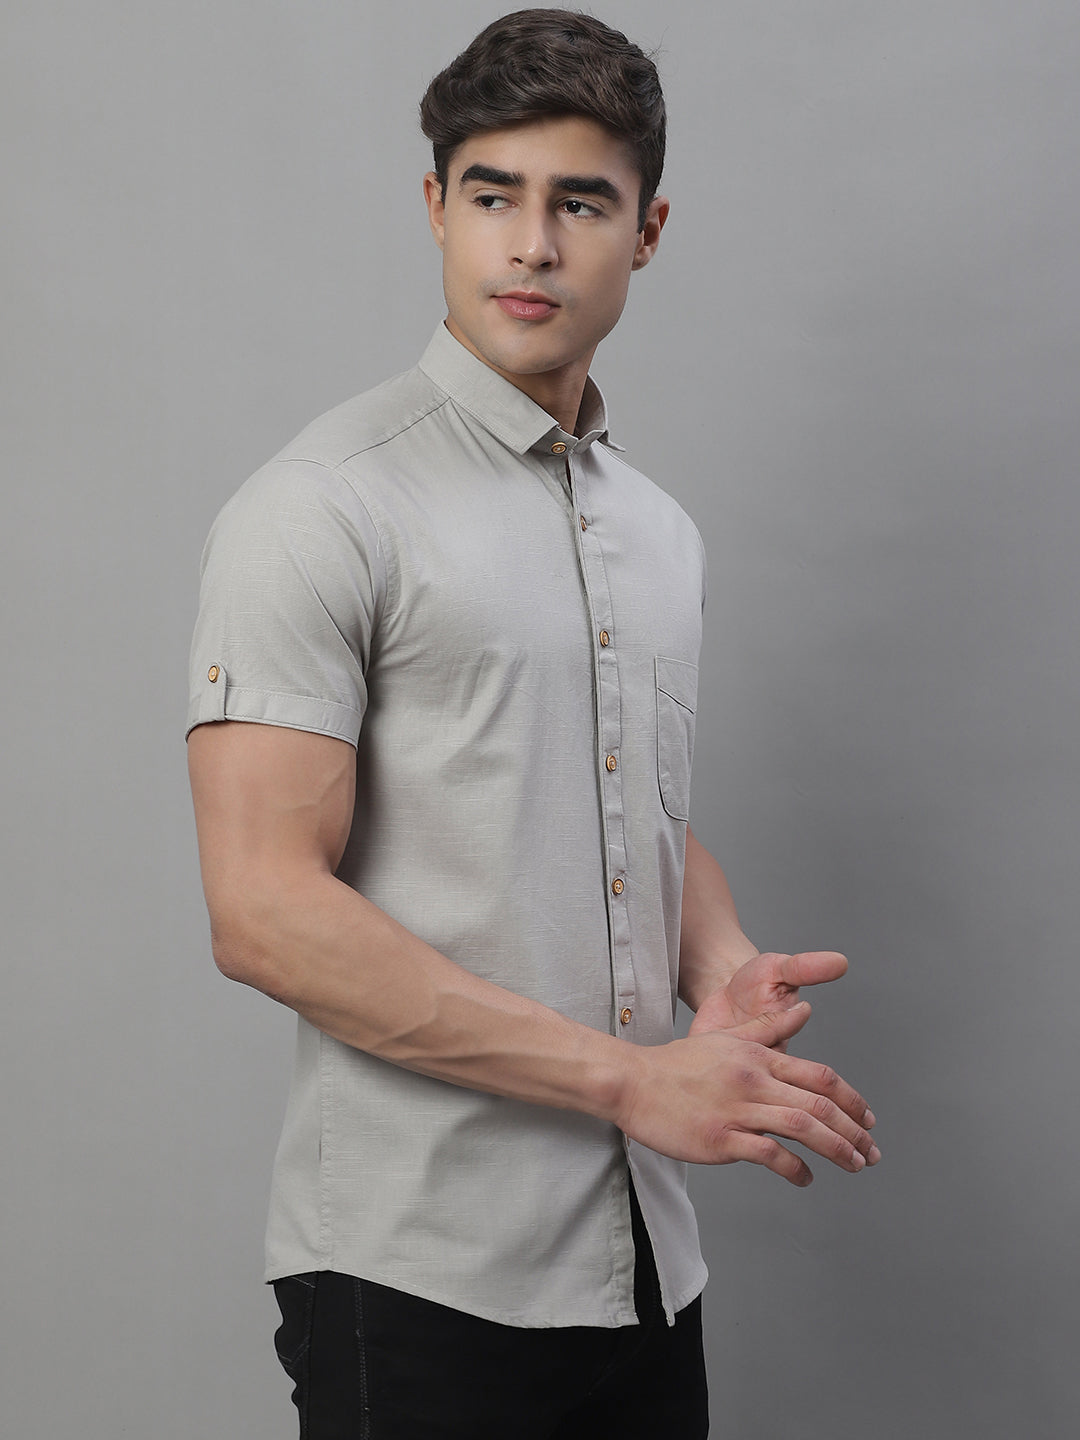 Kicky Pure Cotton Half sleeves Solid Shirt - Light Grey